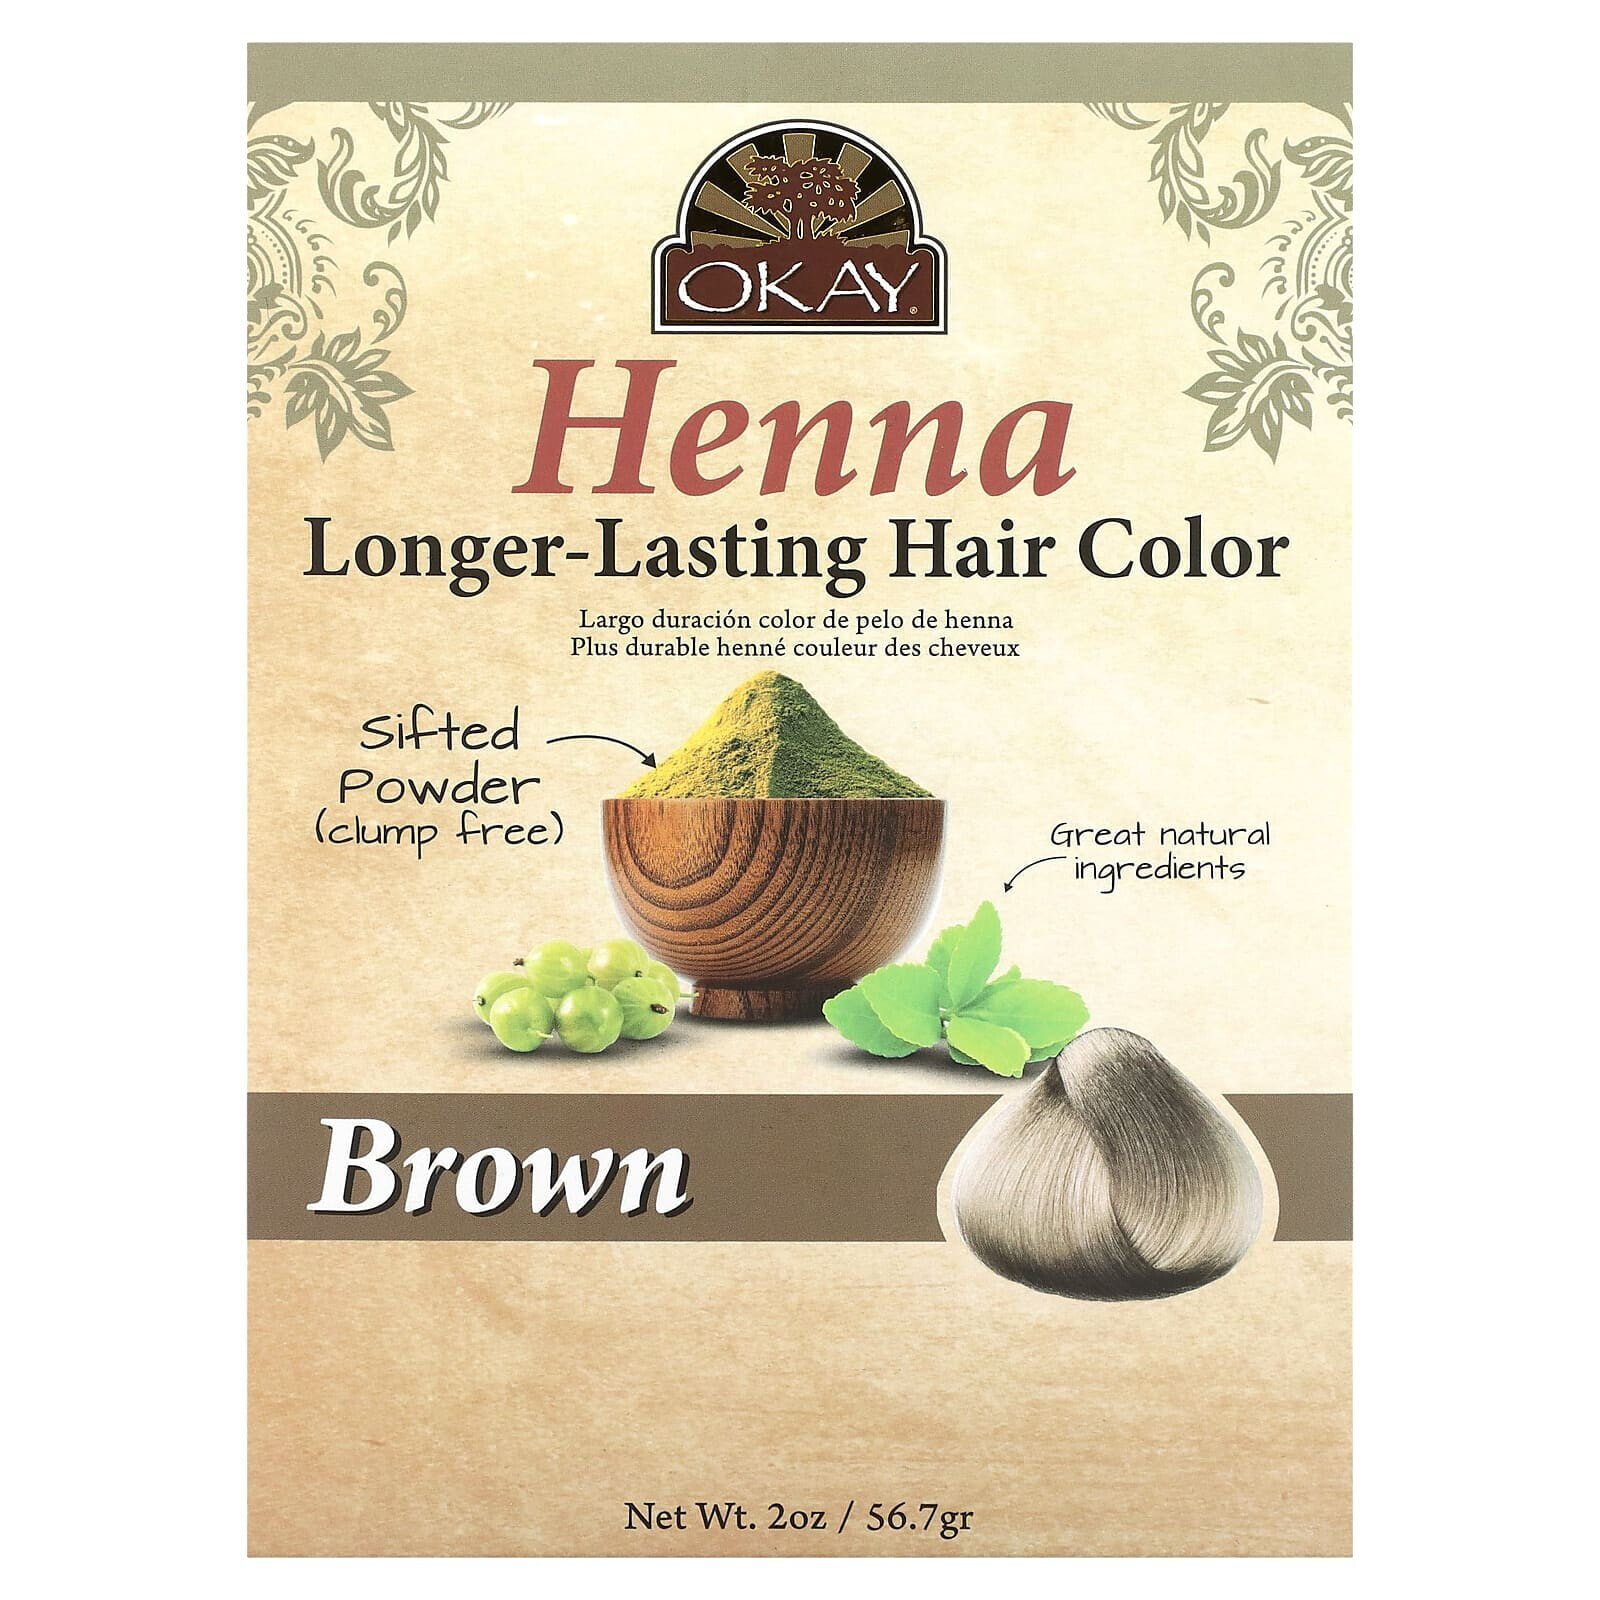 Henna, Longer-Lasting Hair Color, Brown, 2 oz (56.7 g)